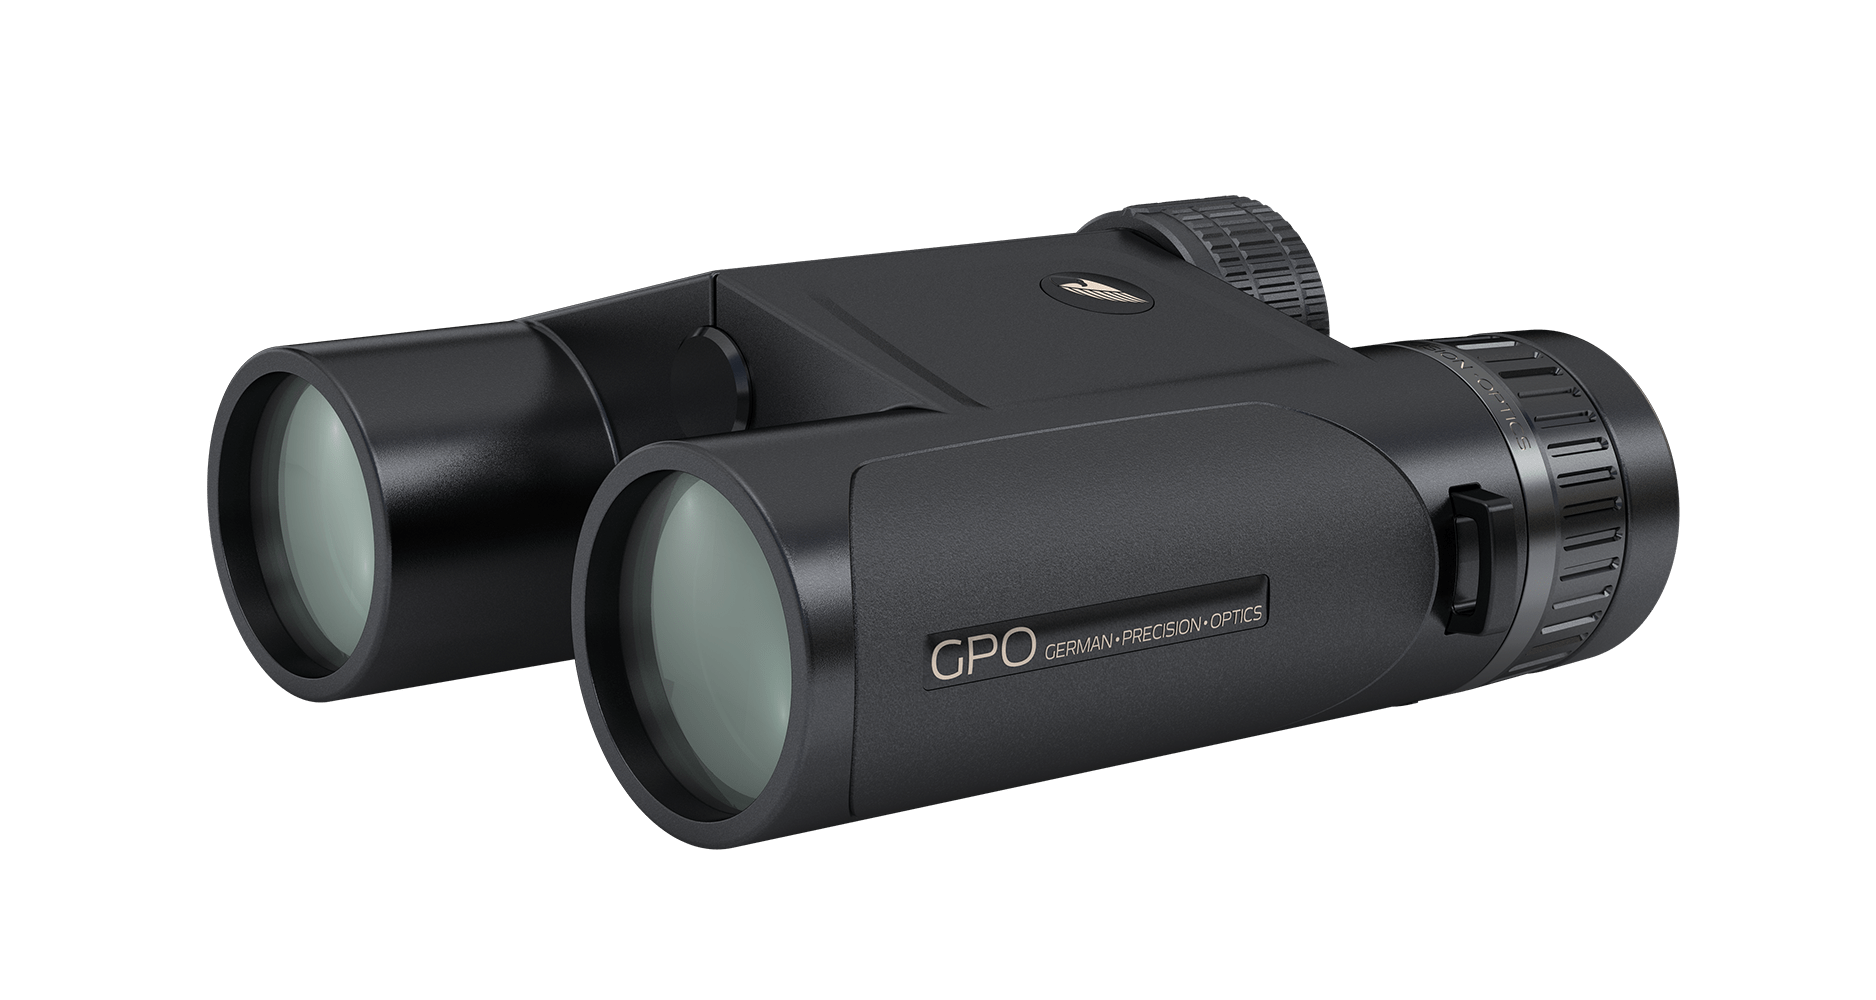 Product Image of GPO Rangeguide 2800 8x32 Laser Rangefinder binoculars